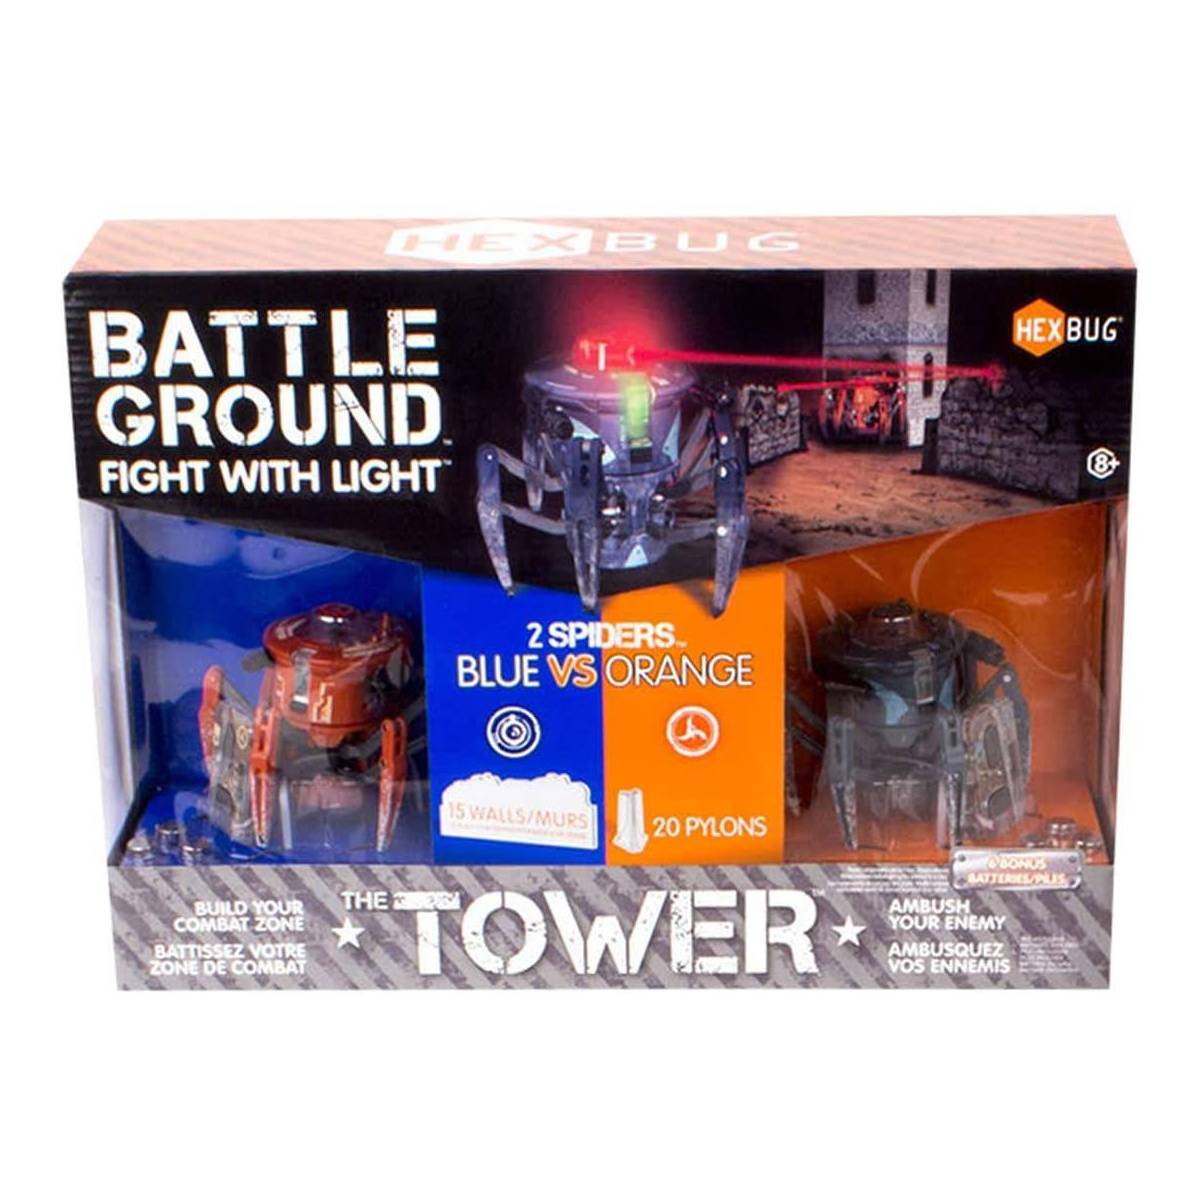 HEXBUG - Battle Ground Tower Robot électronique, 409-5123